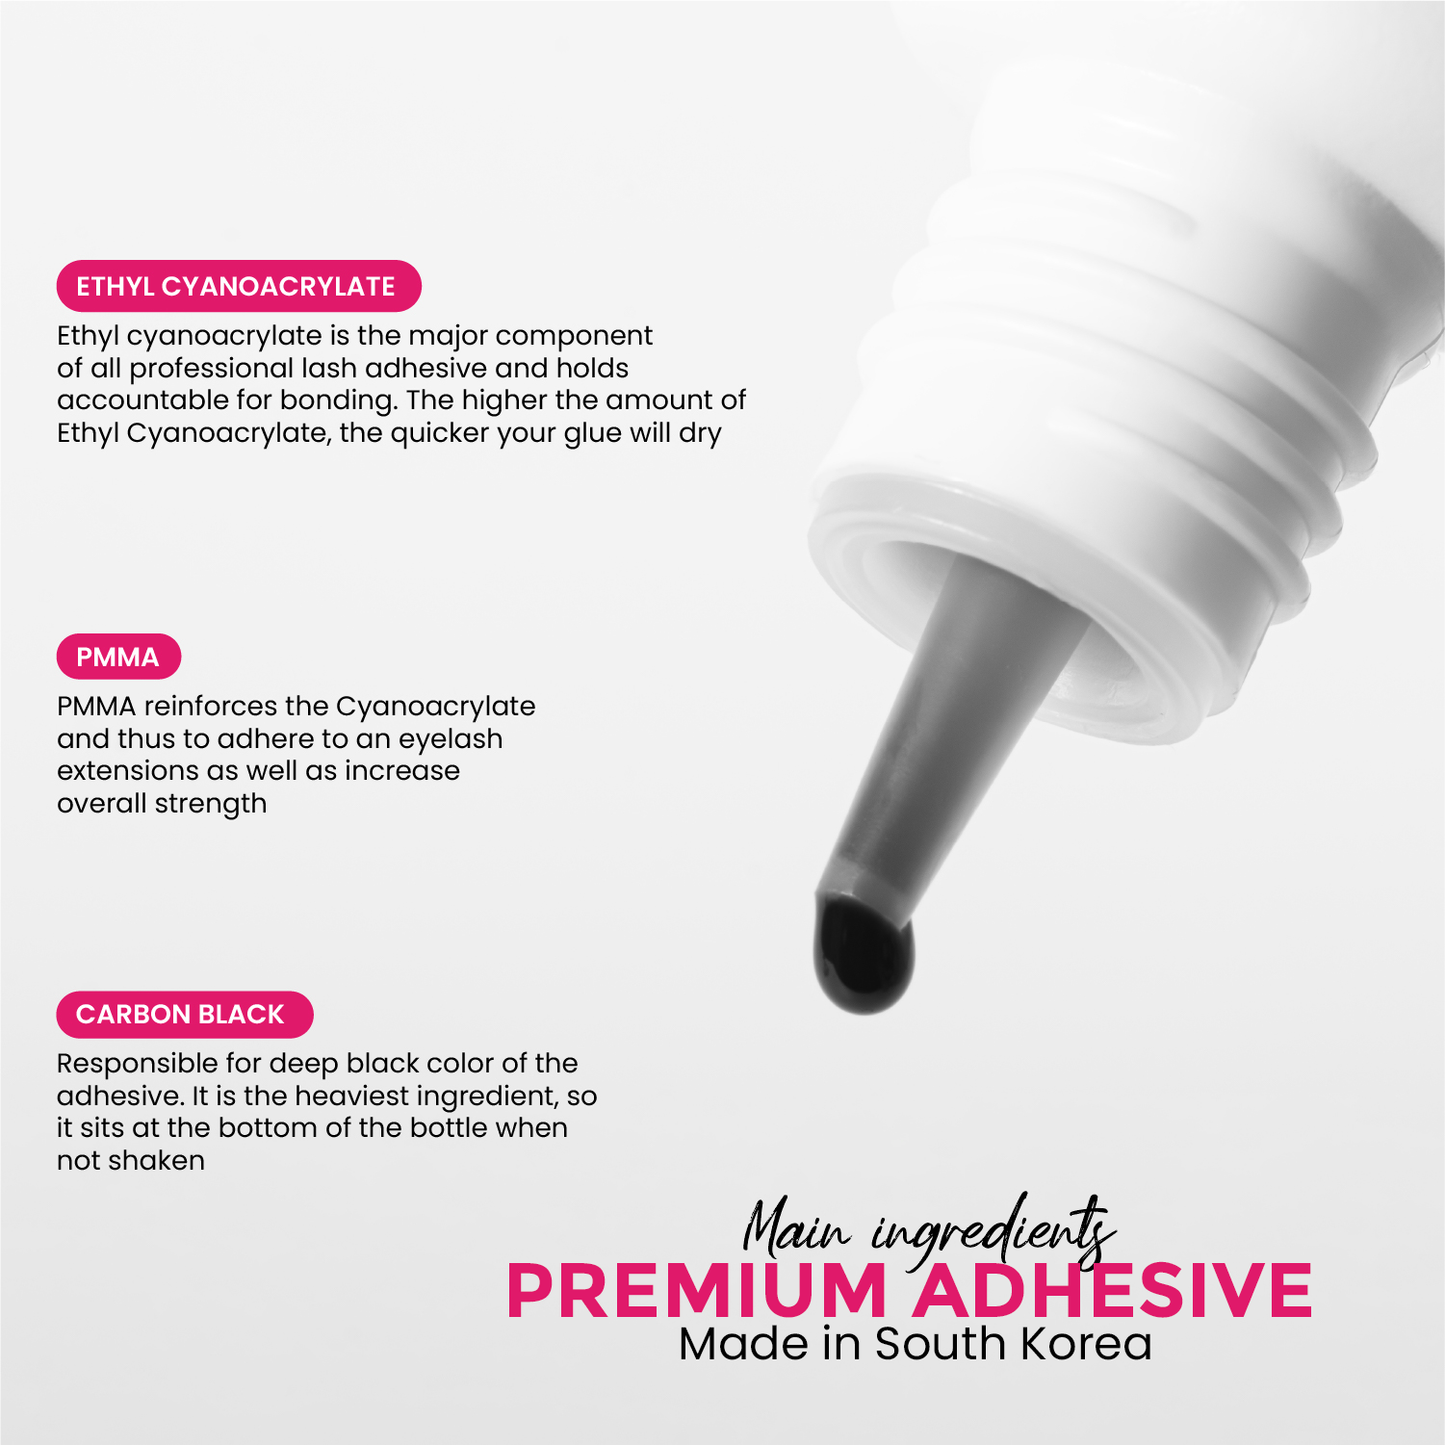 Premium adhesive ingredients